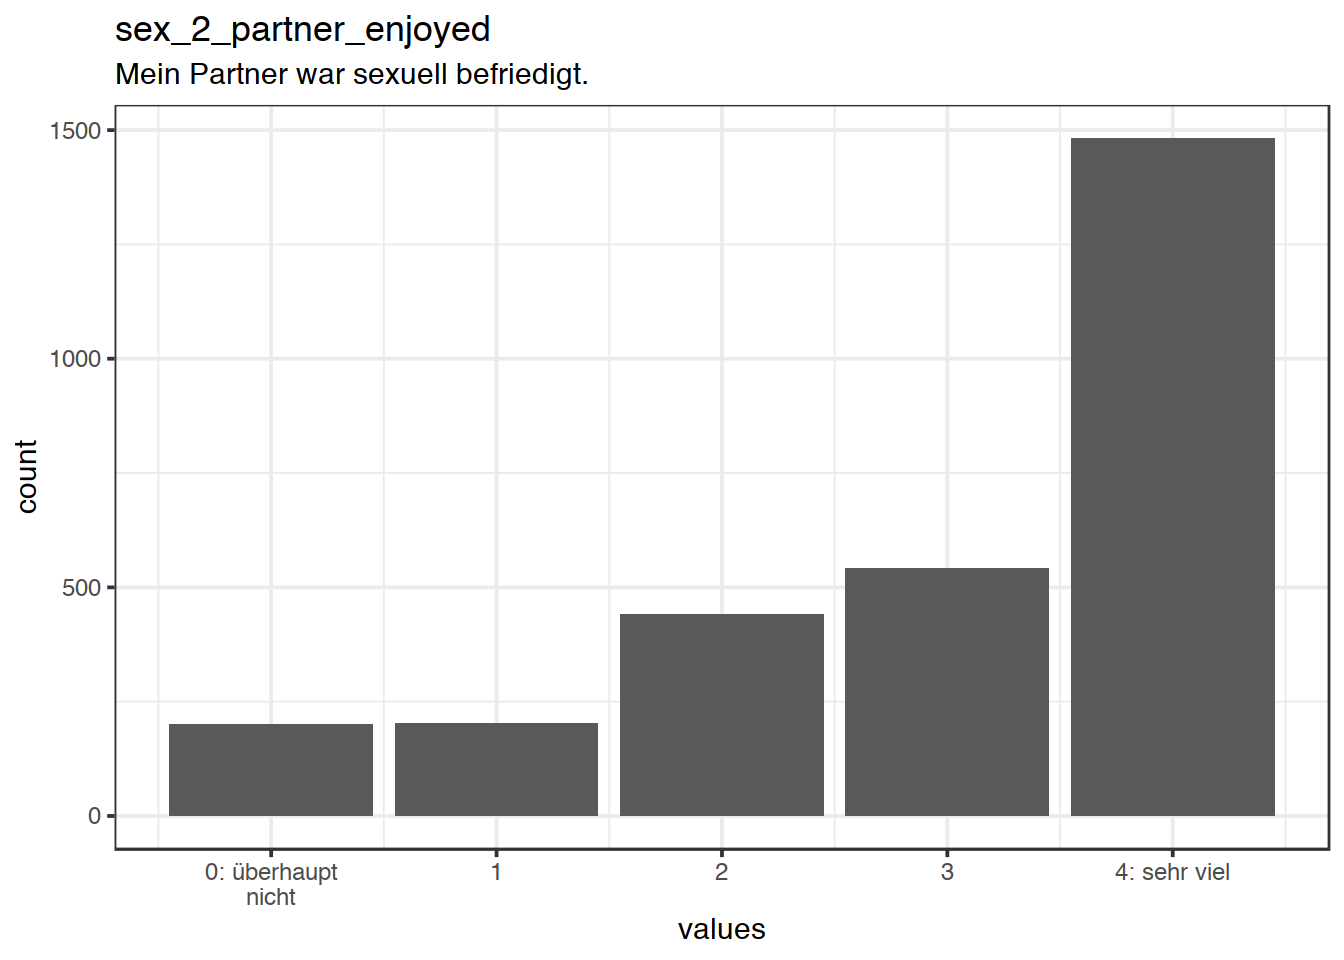 Distribution of values for sex_2_partner_enjoyed